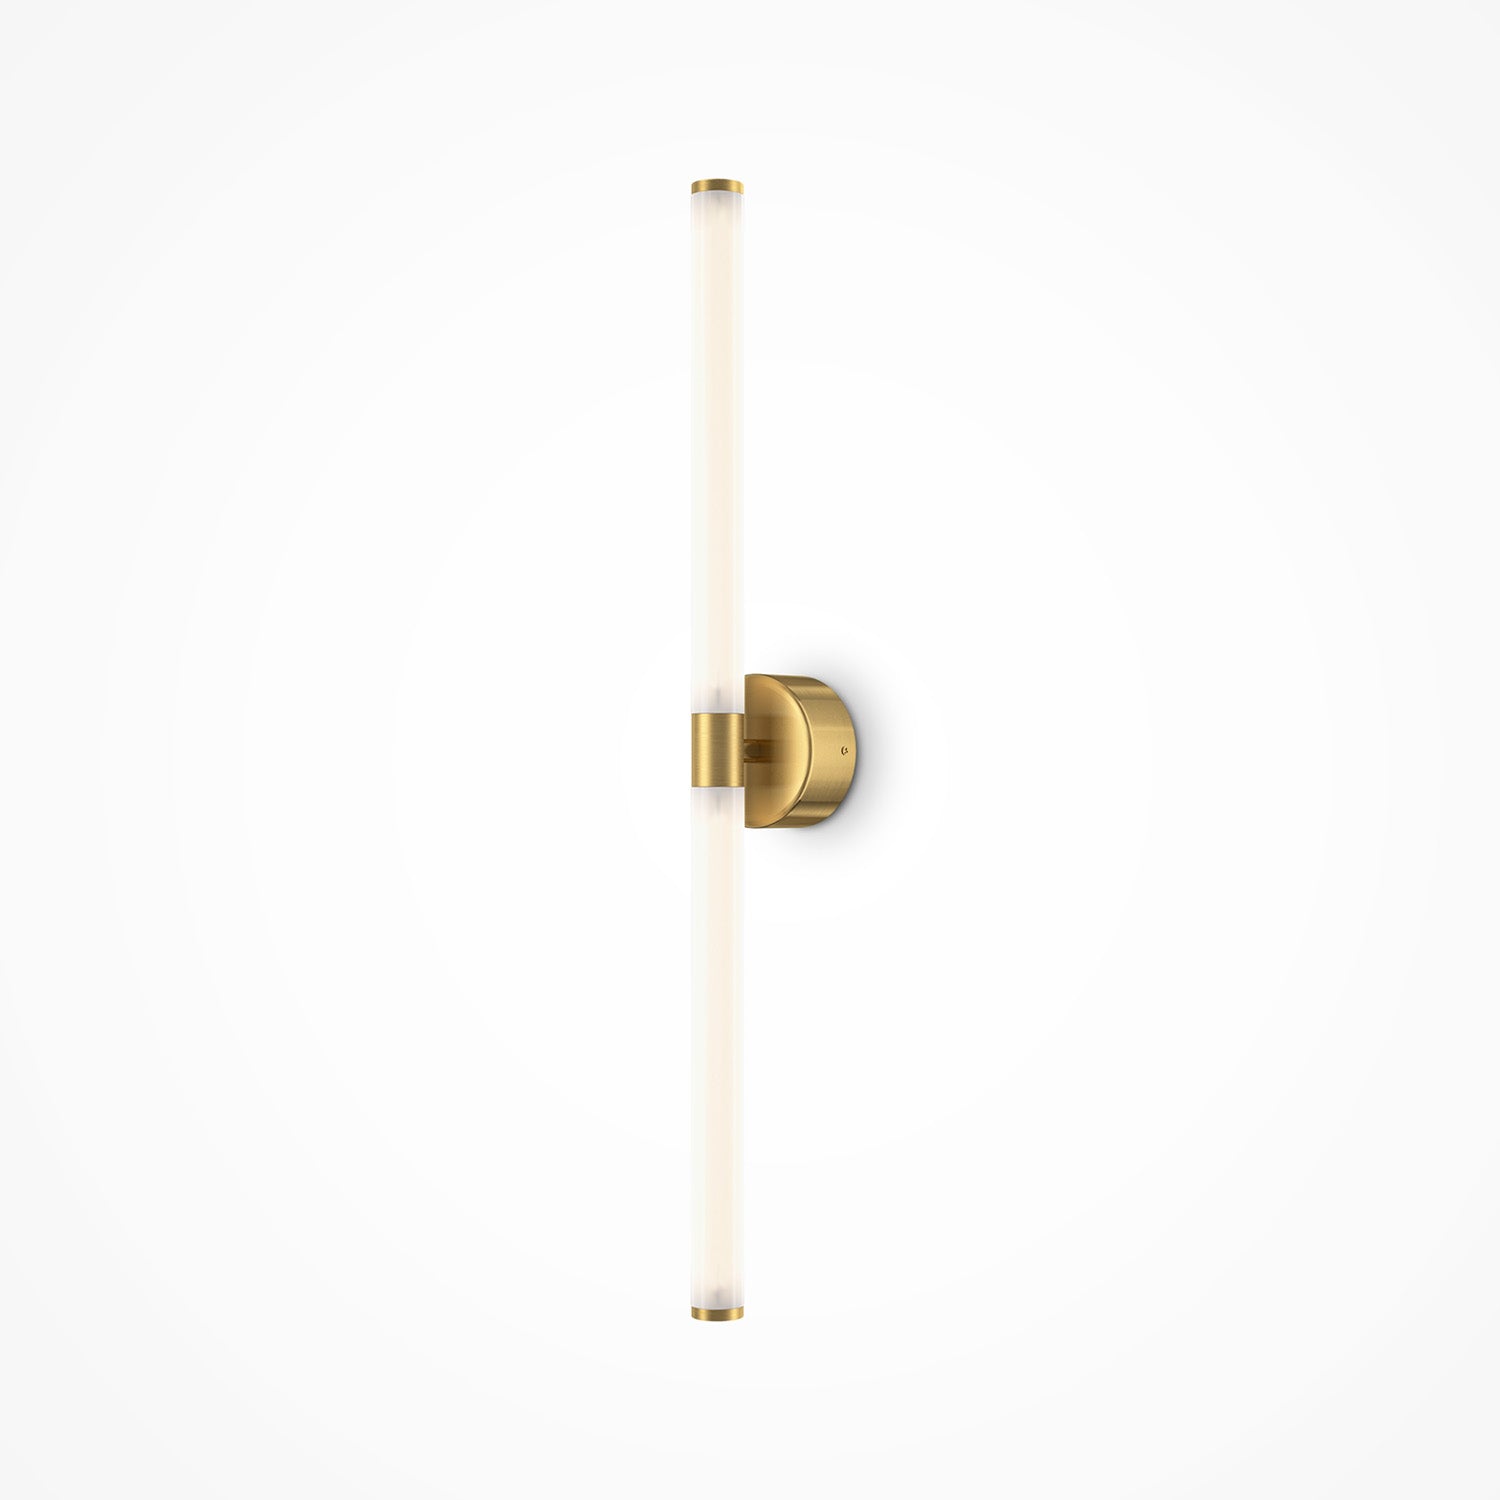 AXIS - Modern LED tube wall light, black, white or gold